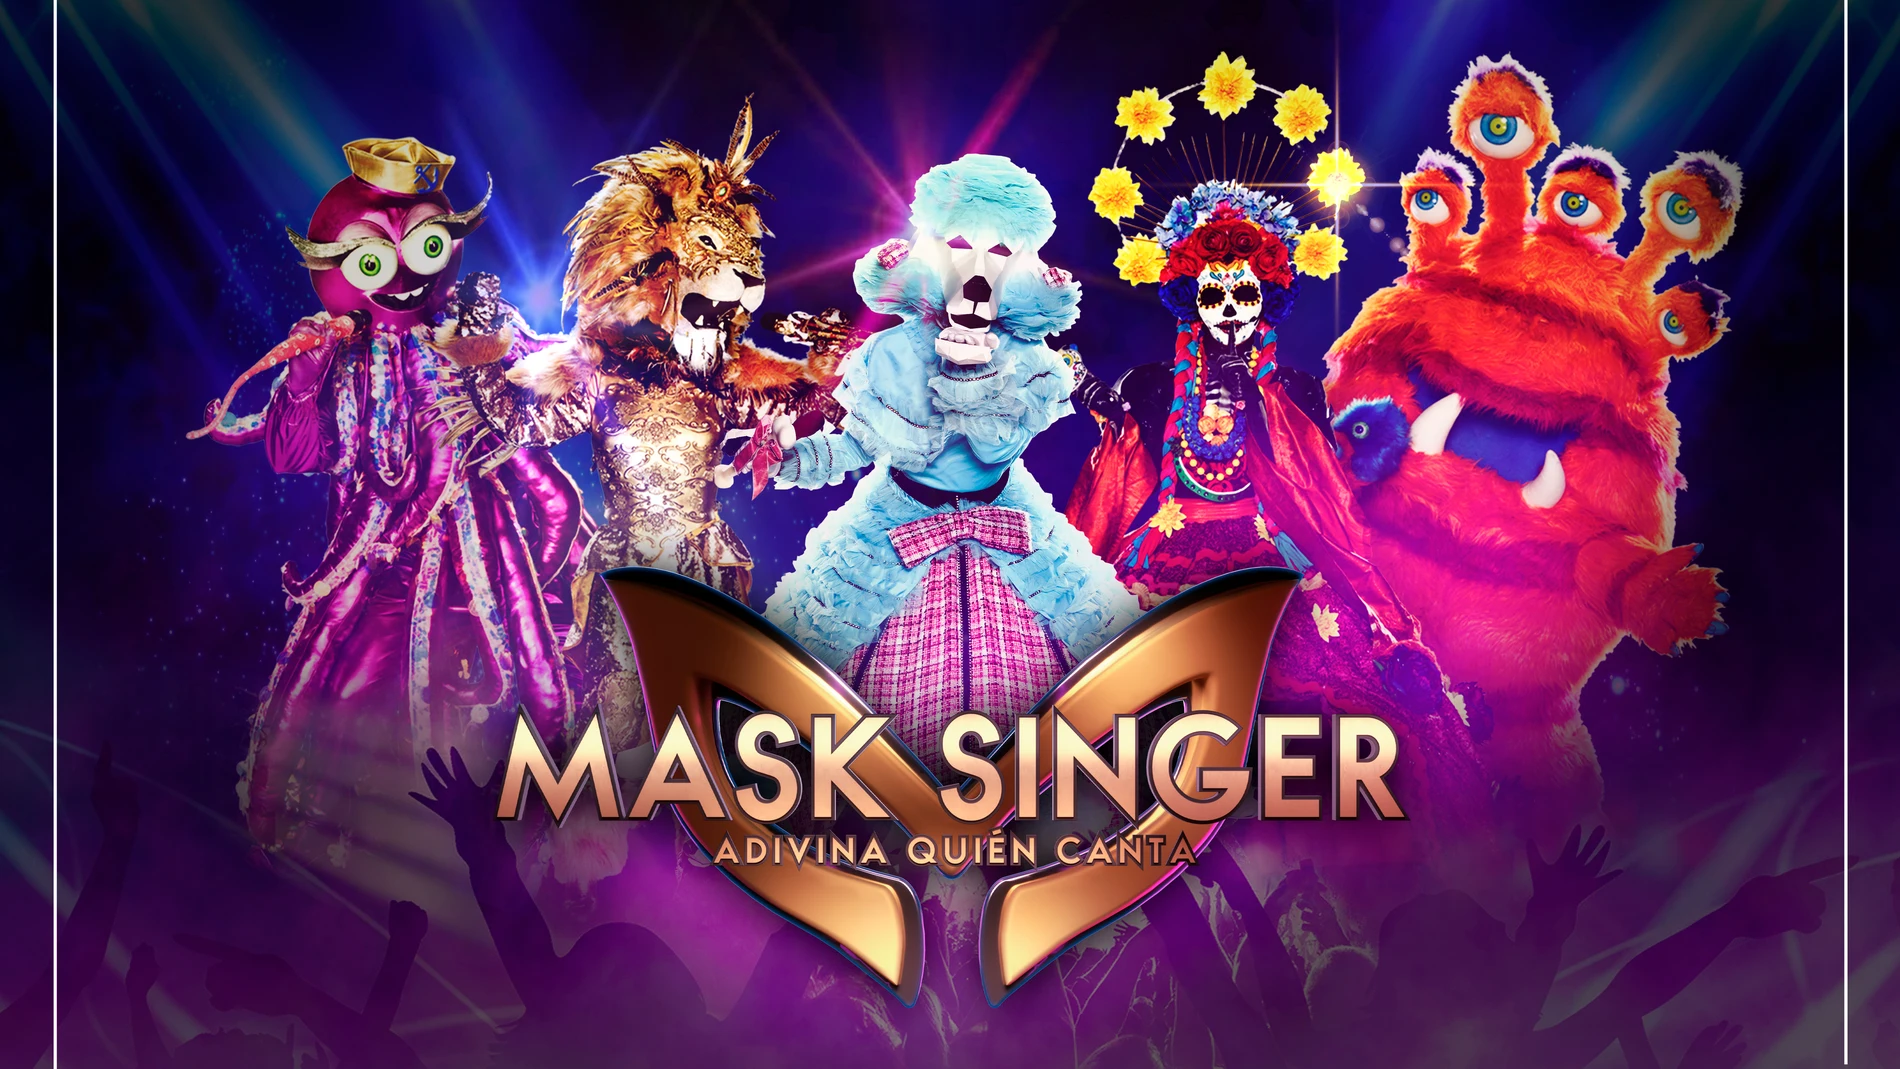 Descárgate los pósters oficiales de 'Mask Singer: adivina quién canta'